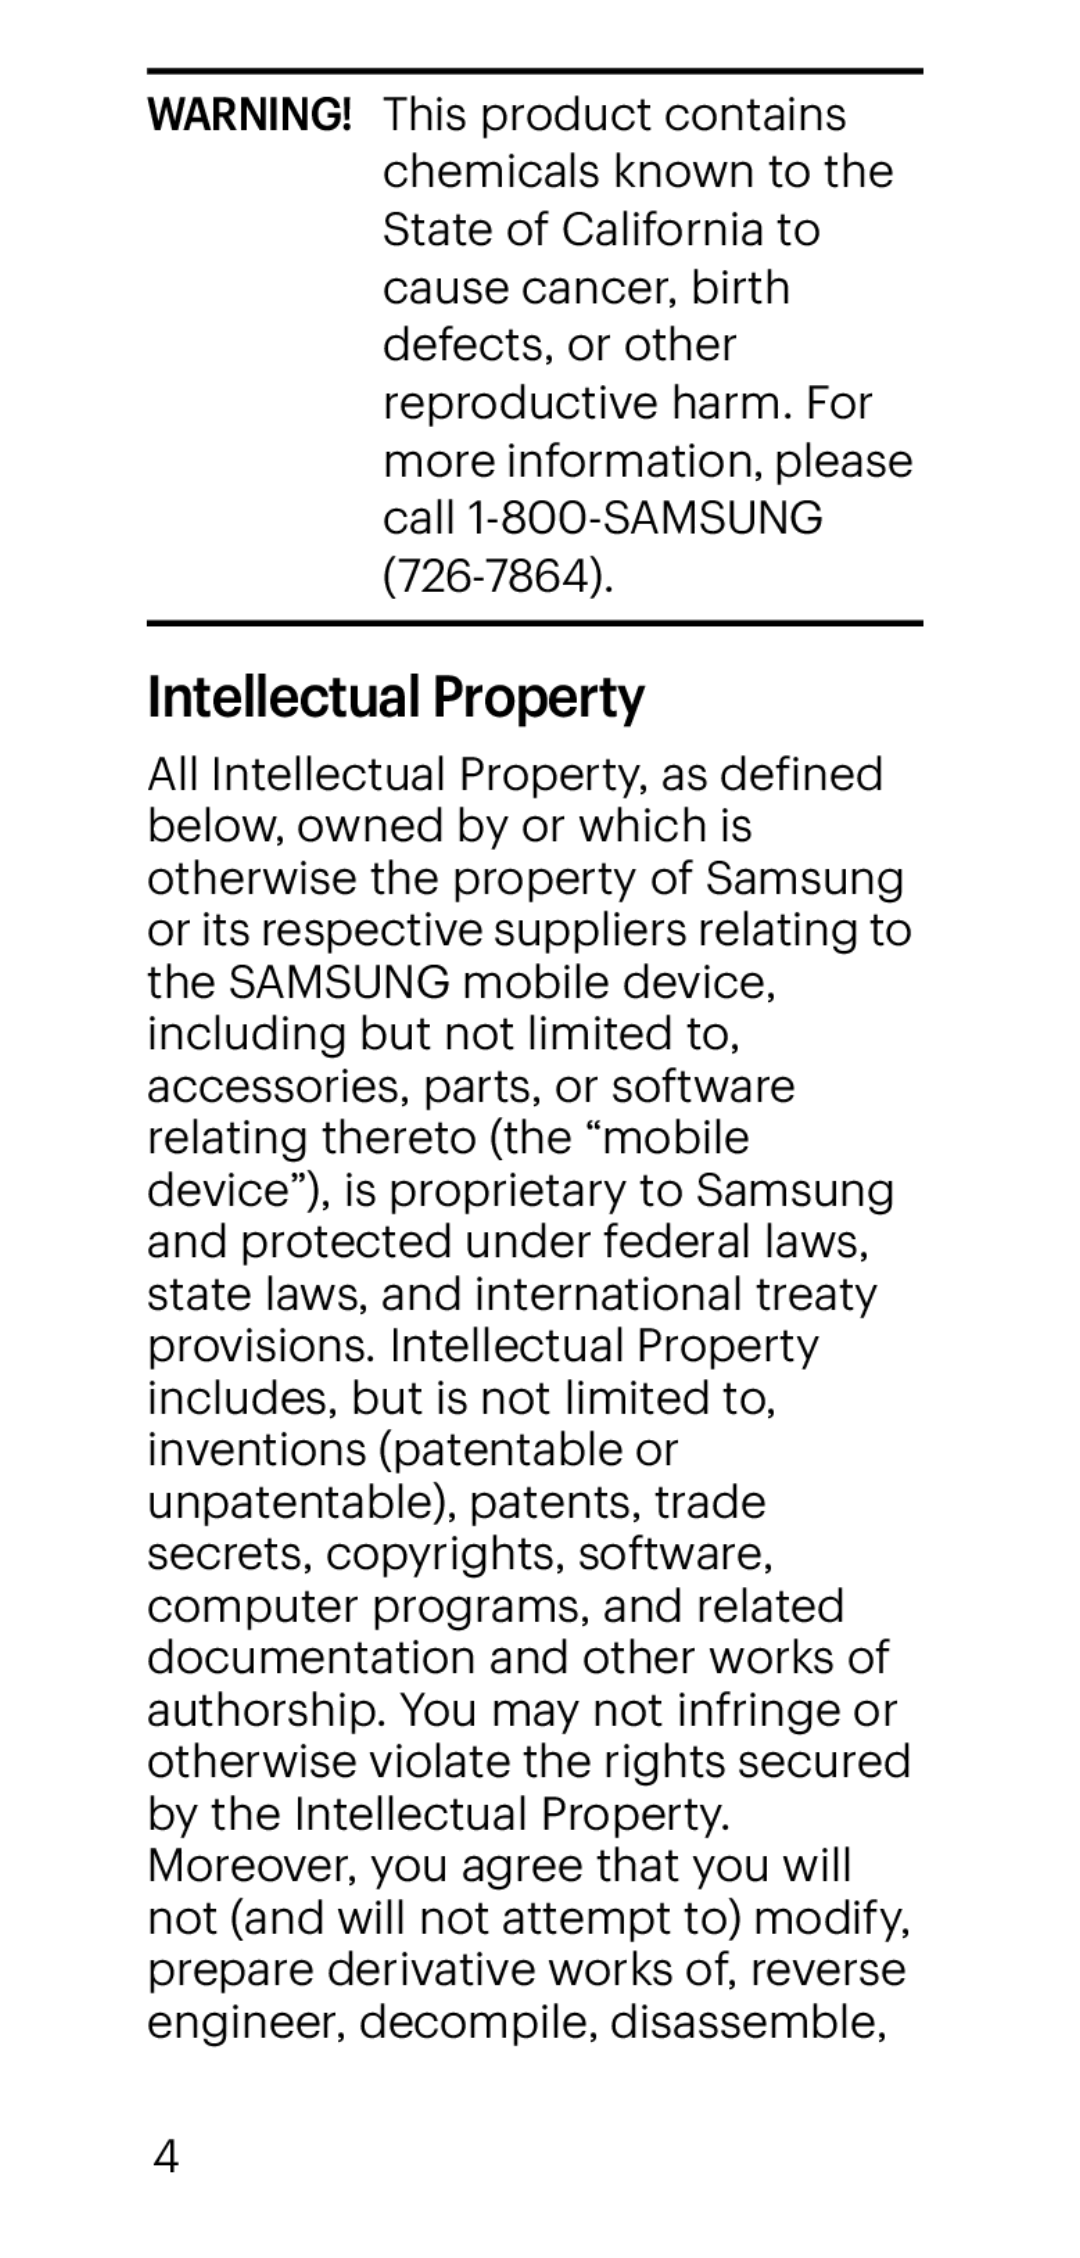 Intellectual Property Galaxy Tab A 10.1 Sprint